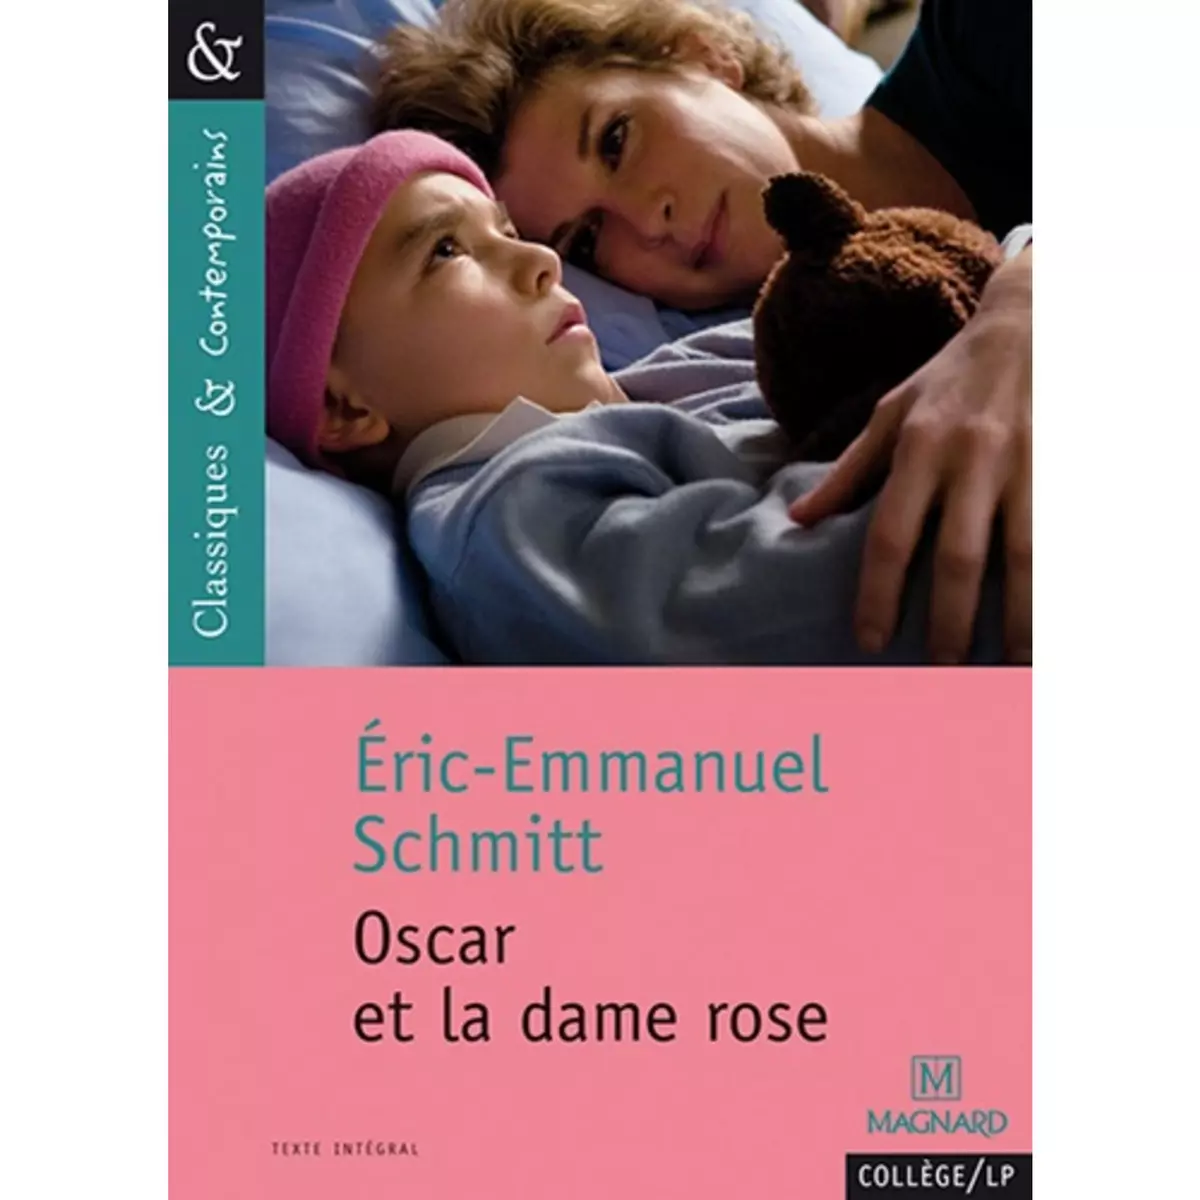  OSCAR ET LA DAME ROSE, Schmitt Eric-Emmanuel